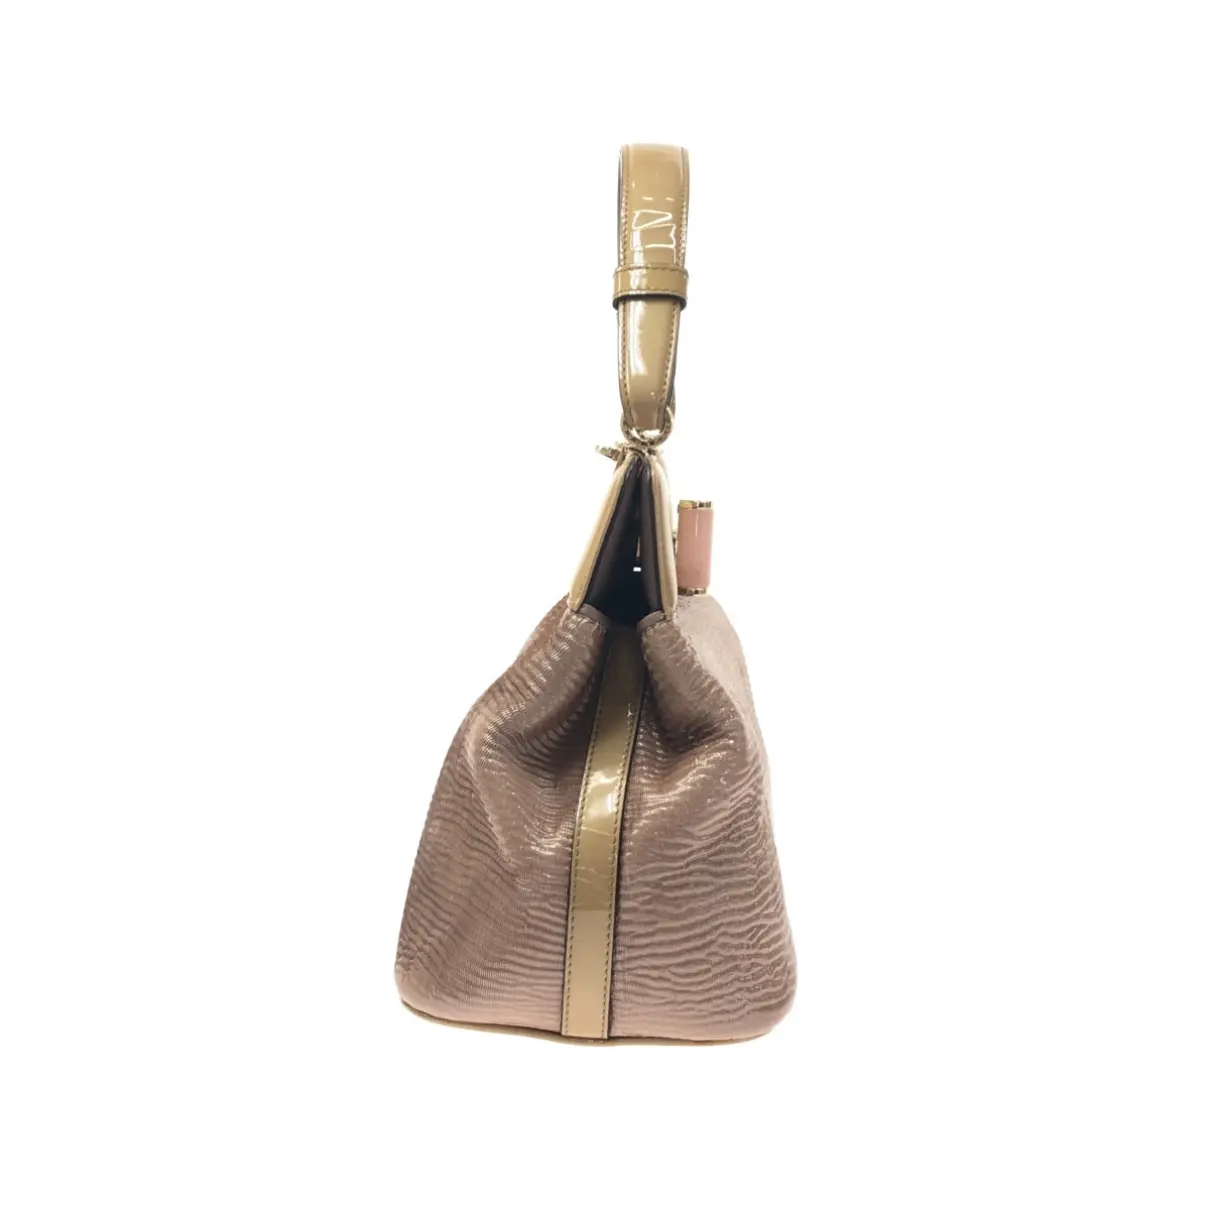 Buy Bvlgari Isabella Rossellini patent leather handbag online